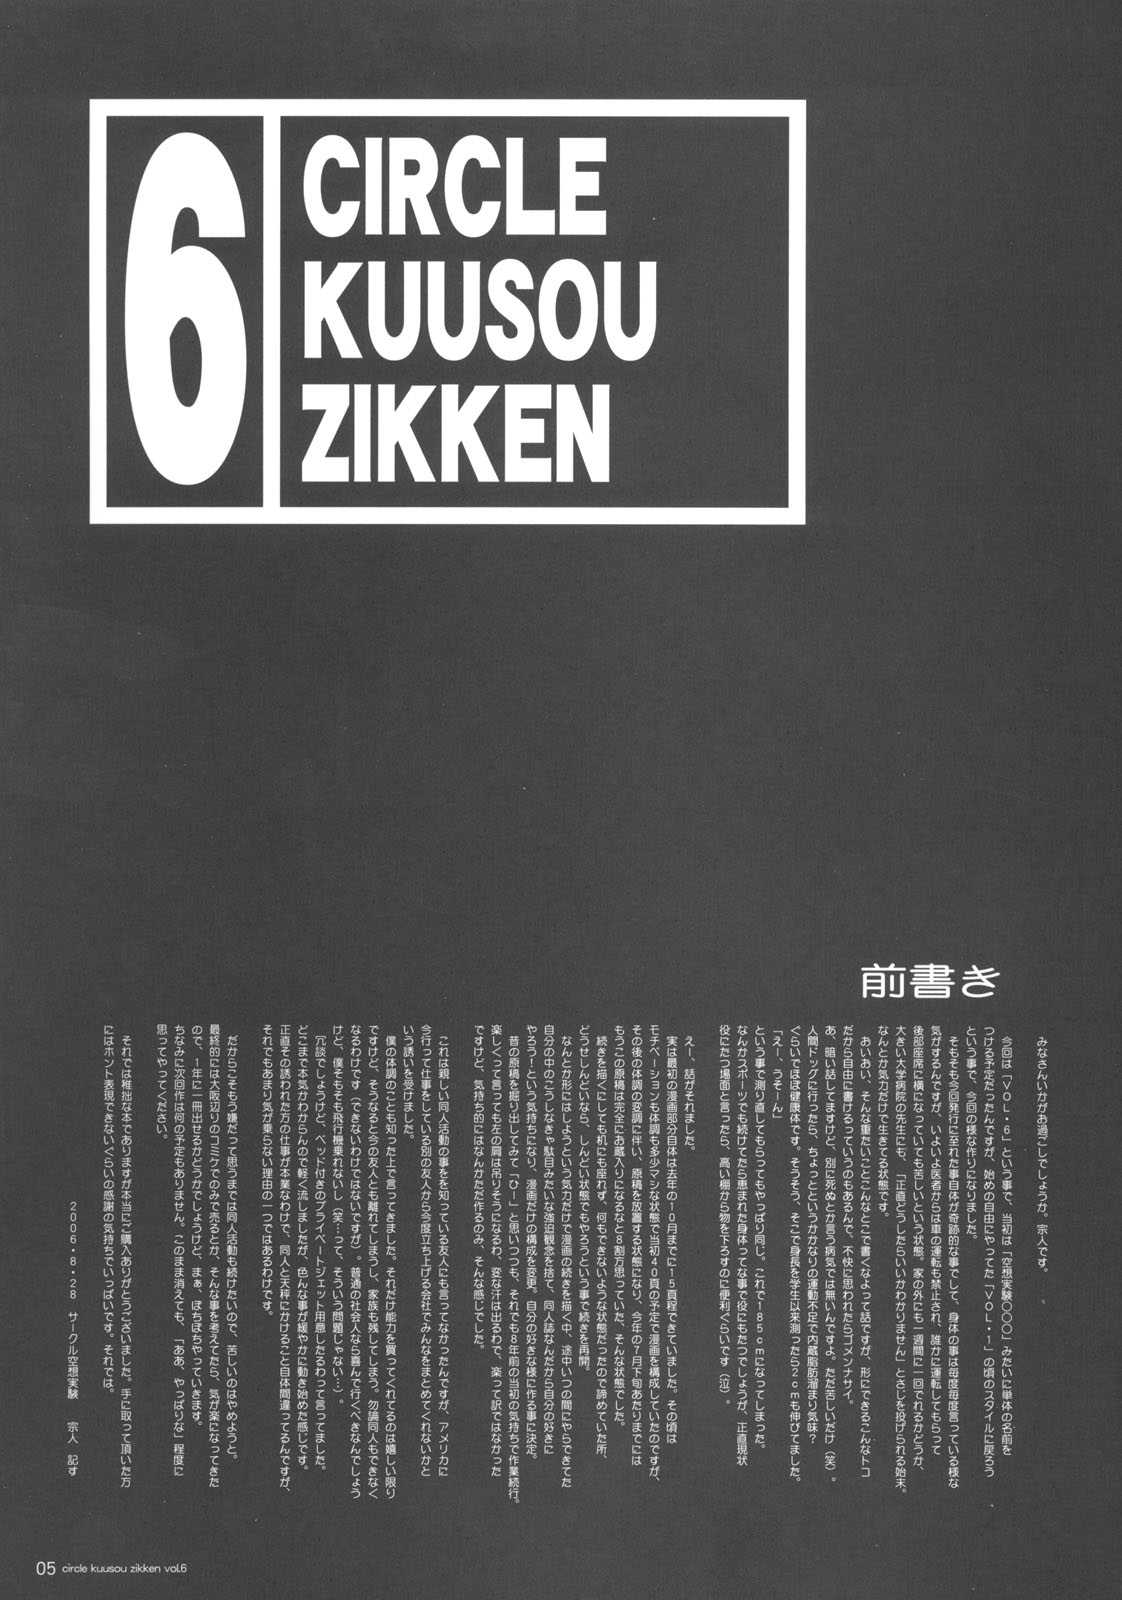 [Circle Kuusou Zikken] Kuusou Zikken Vol 6 (Bleach) [サークル空想実験] 空想実験 Vol.6 (ブリーチ)